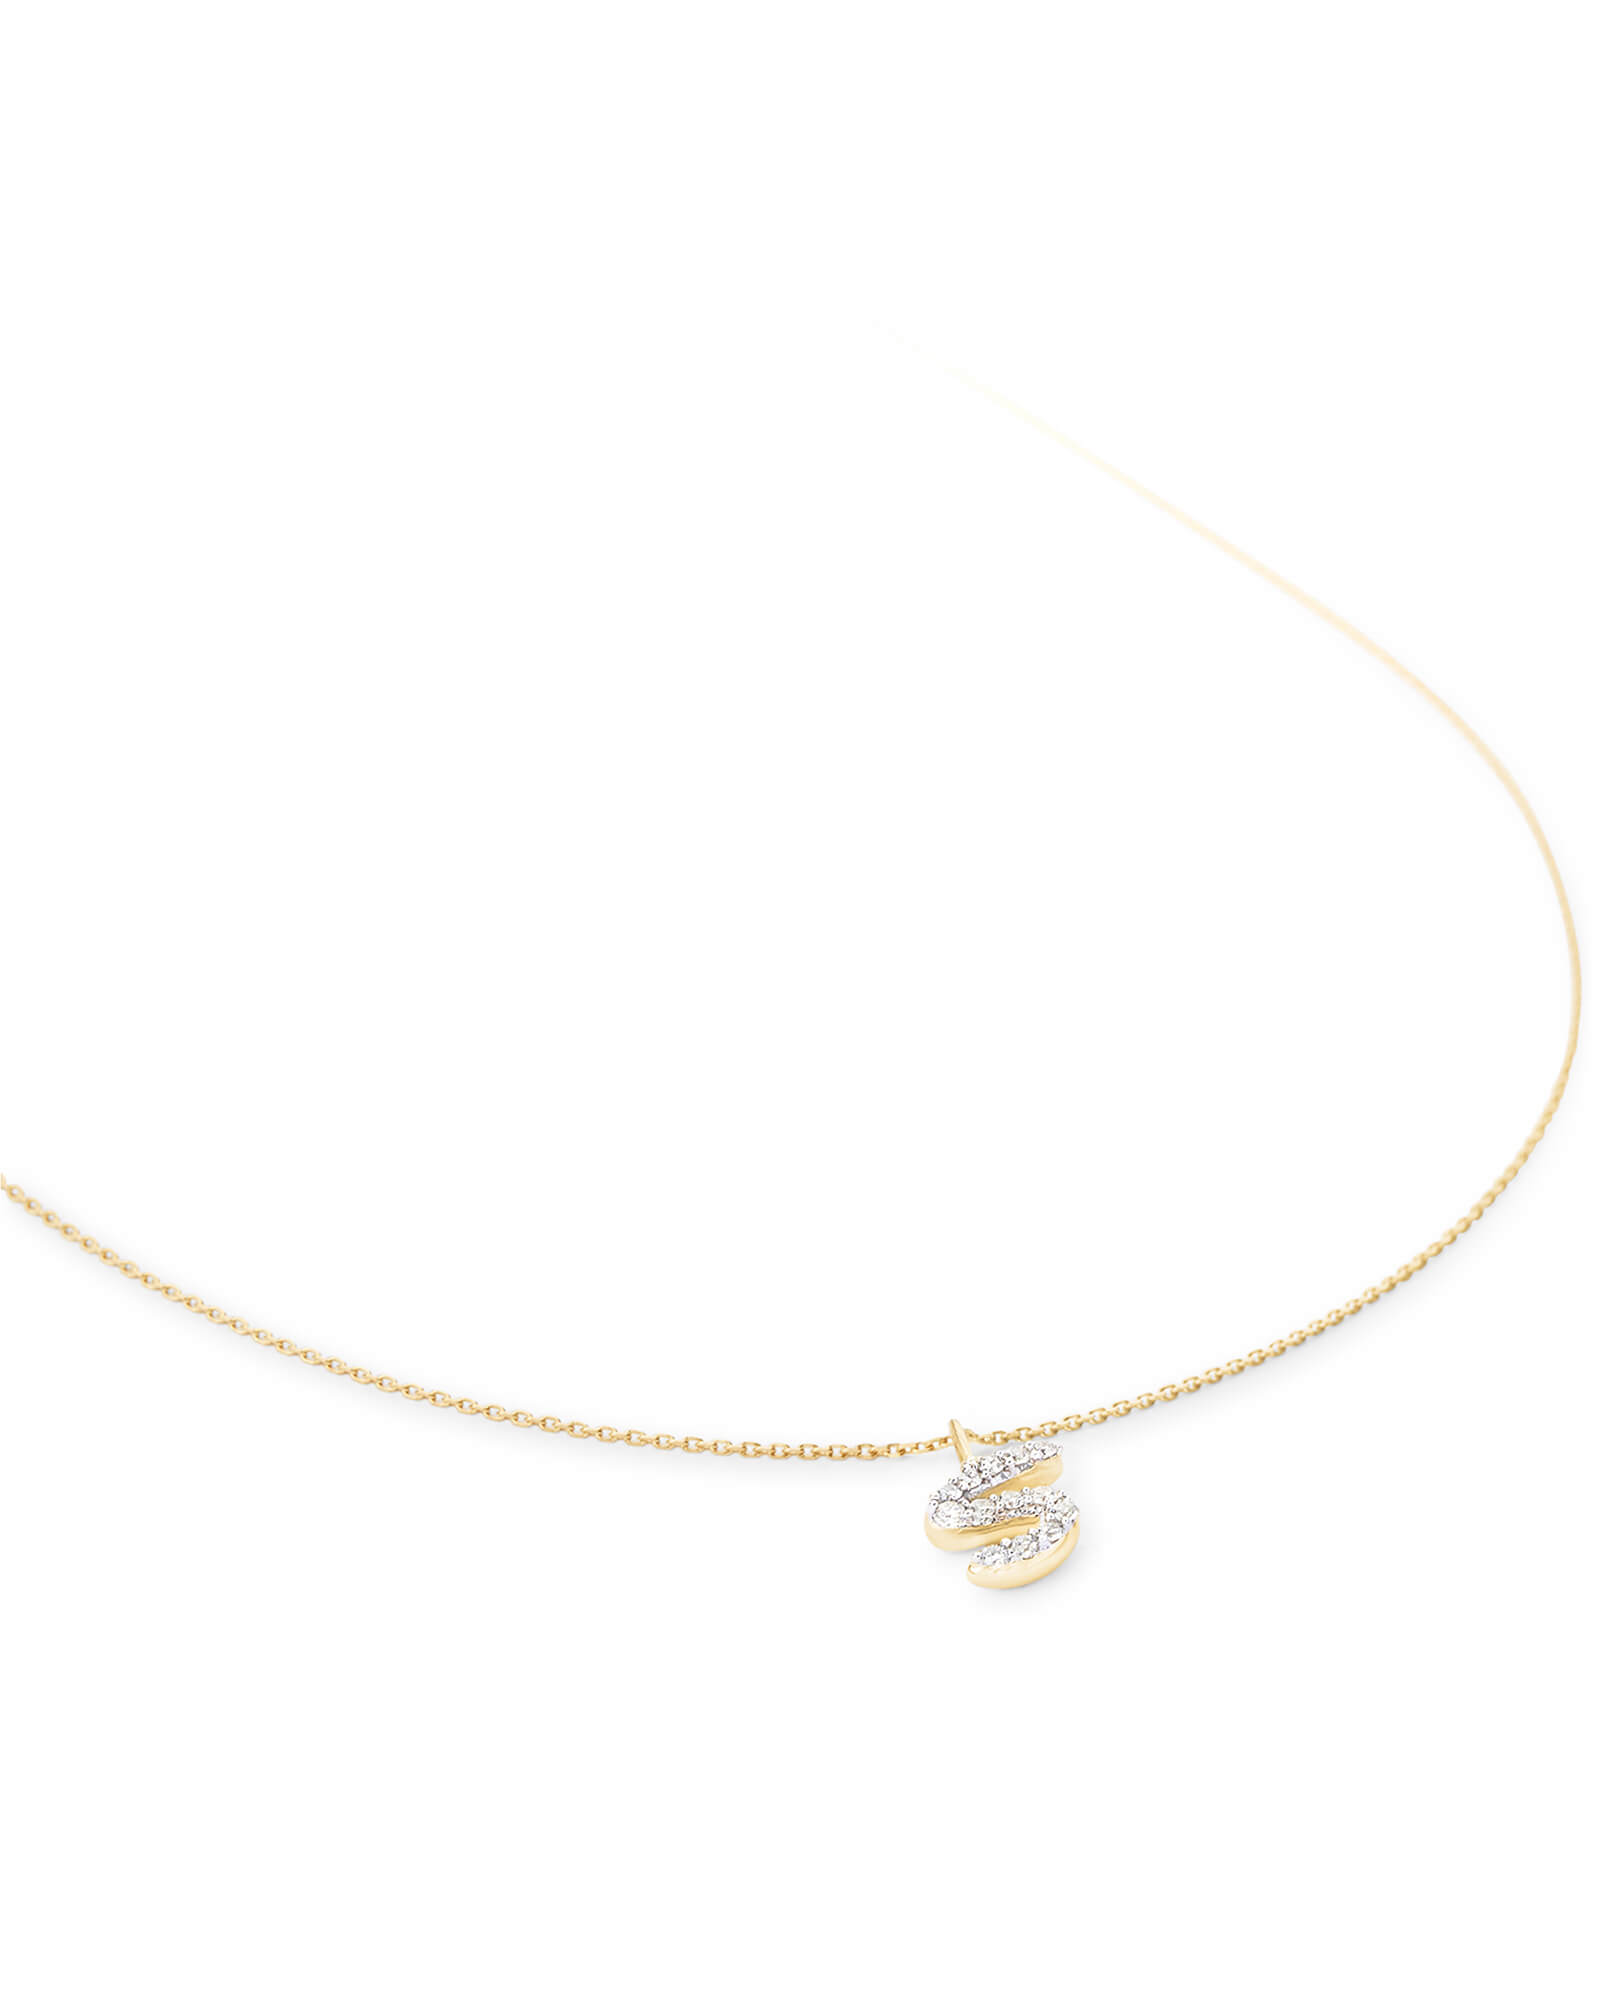 Kendra Scott Diamond Letter S Pendant Necklace in 14k Yellow Gold | Diamonds